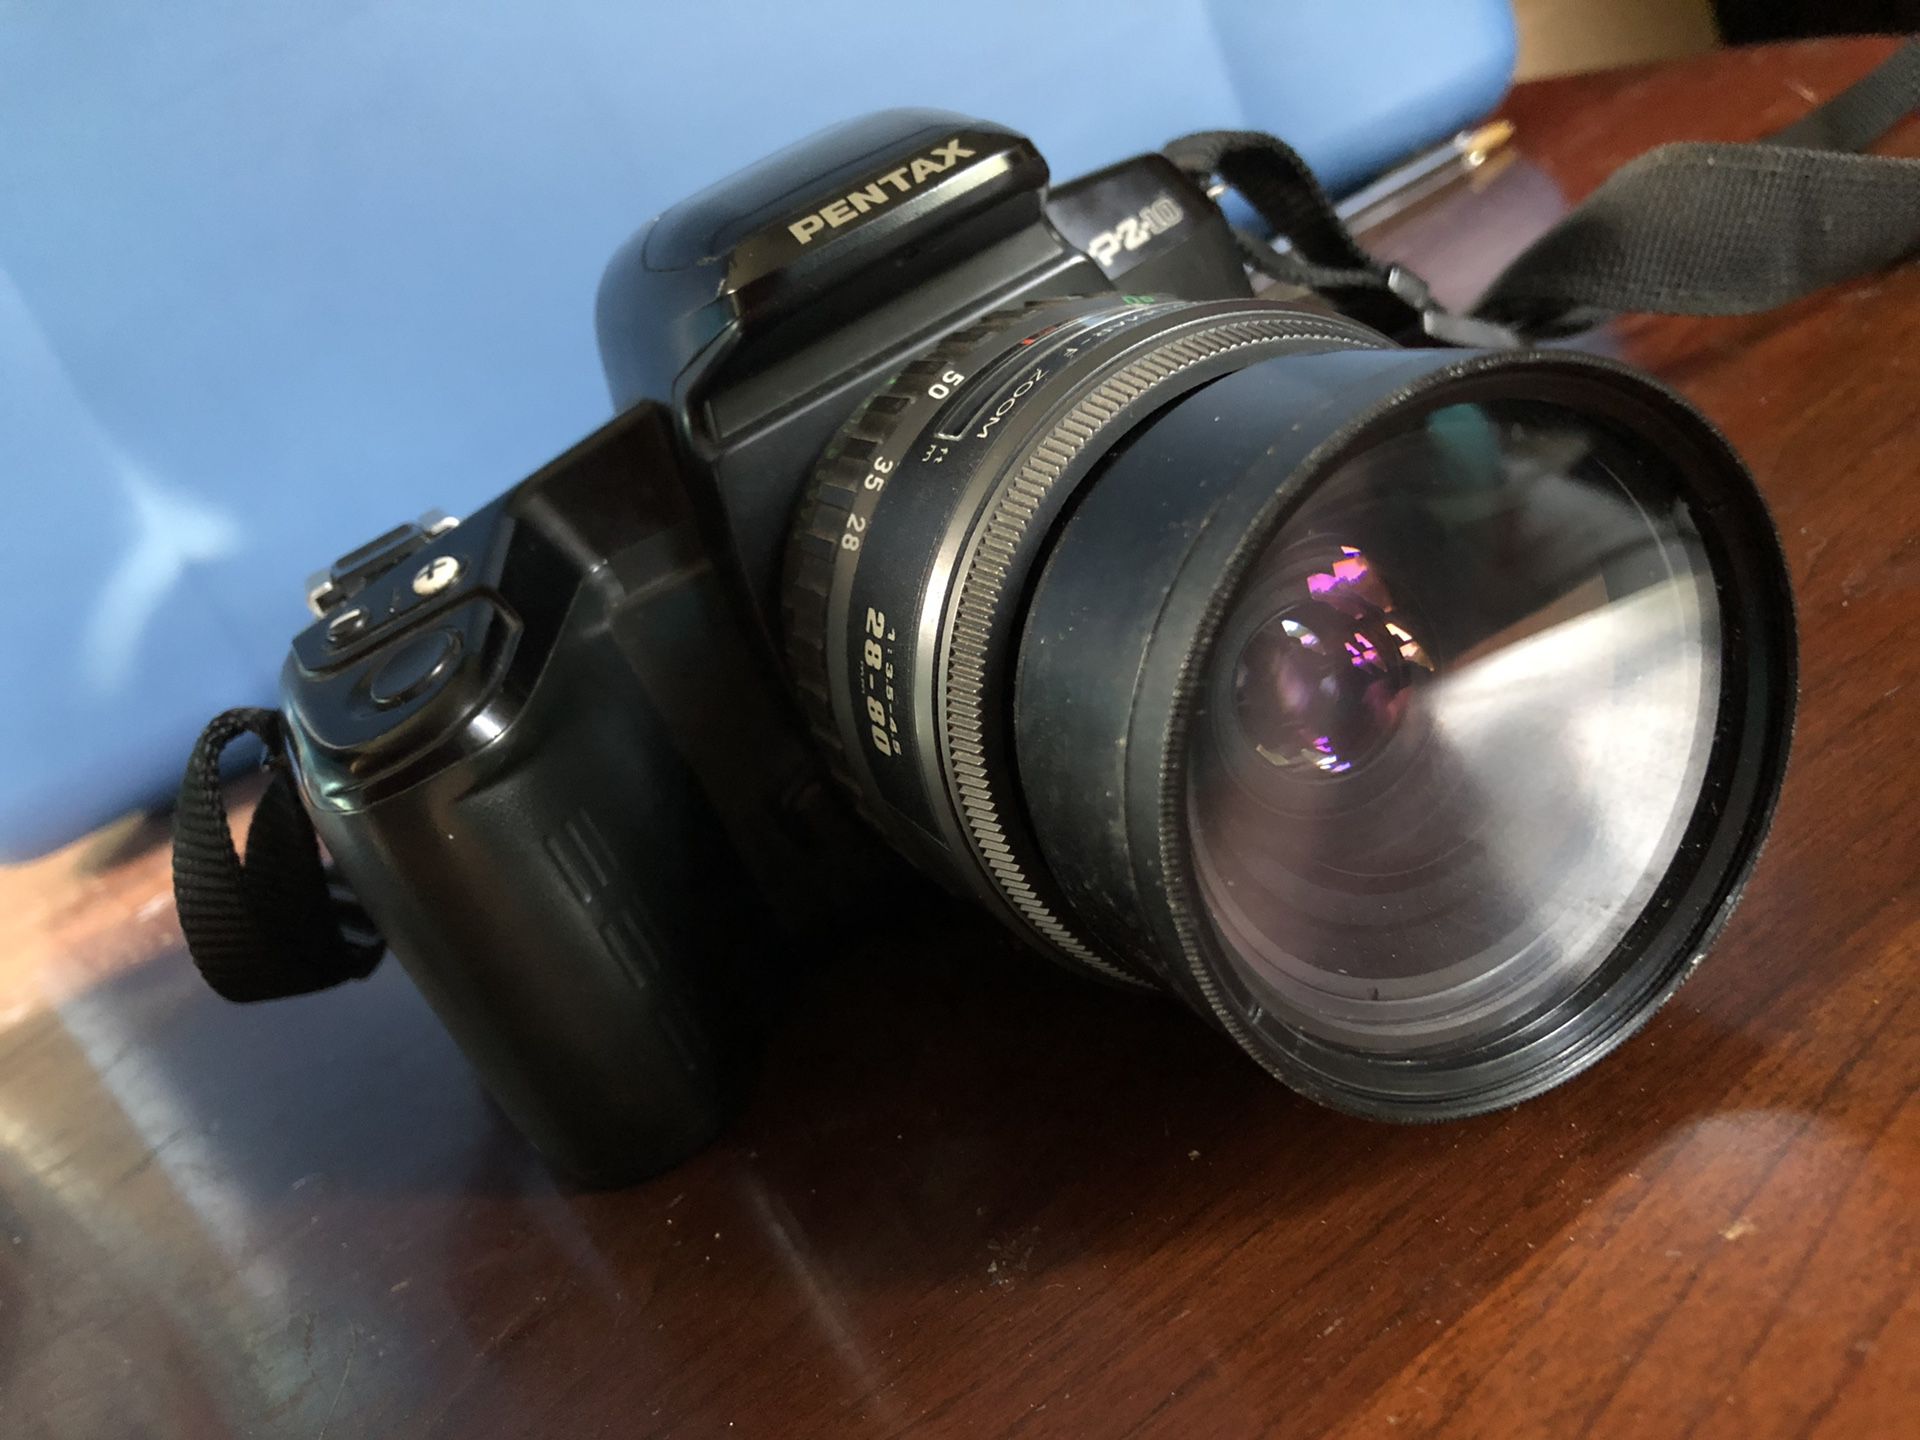 Pentax film camera